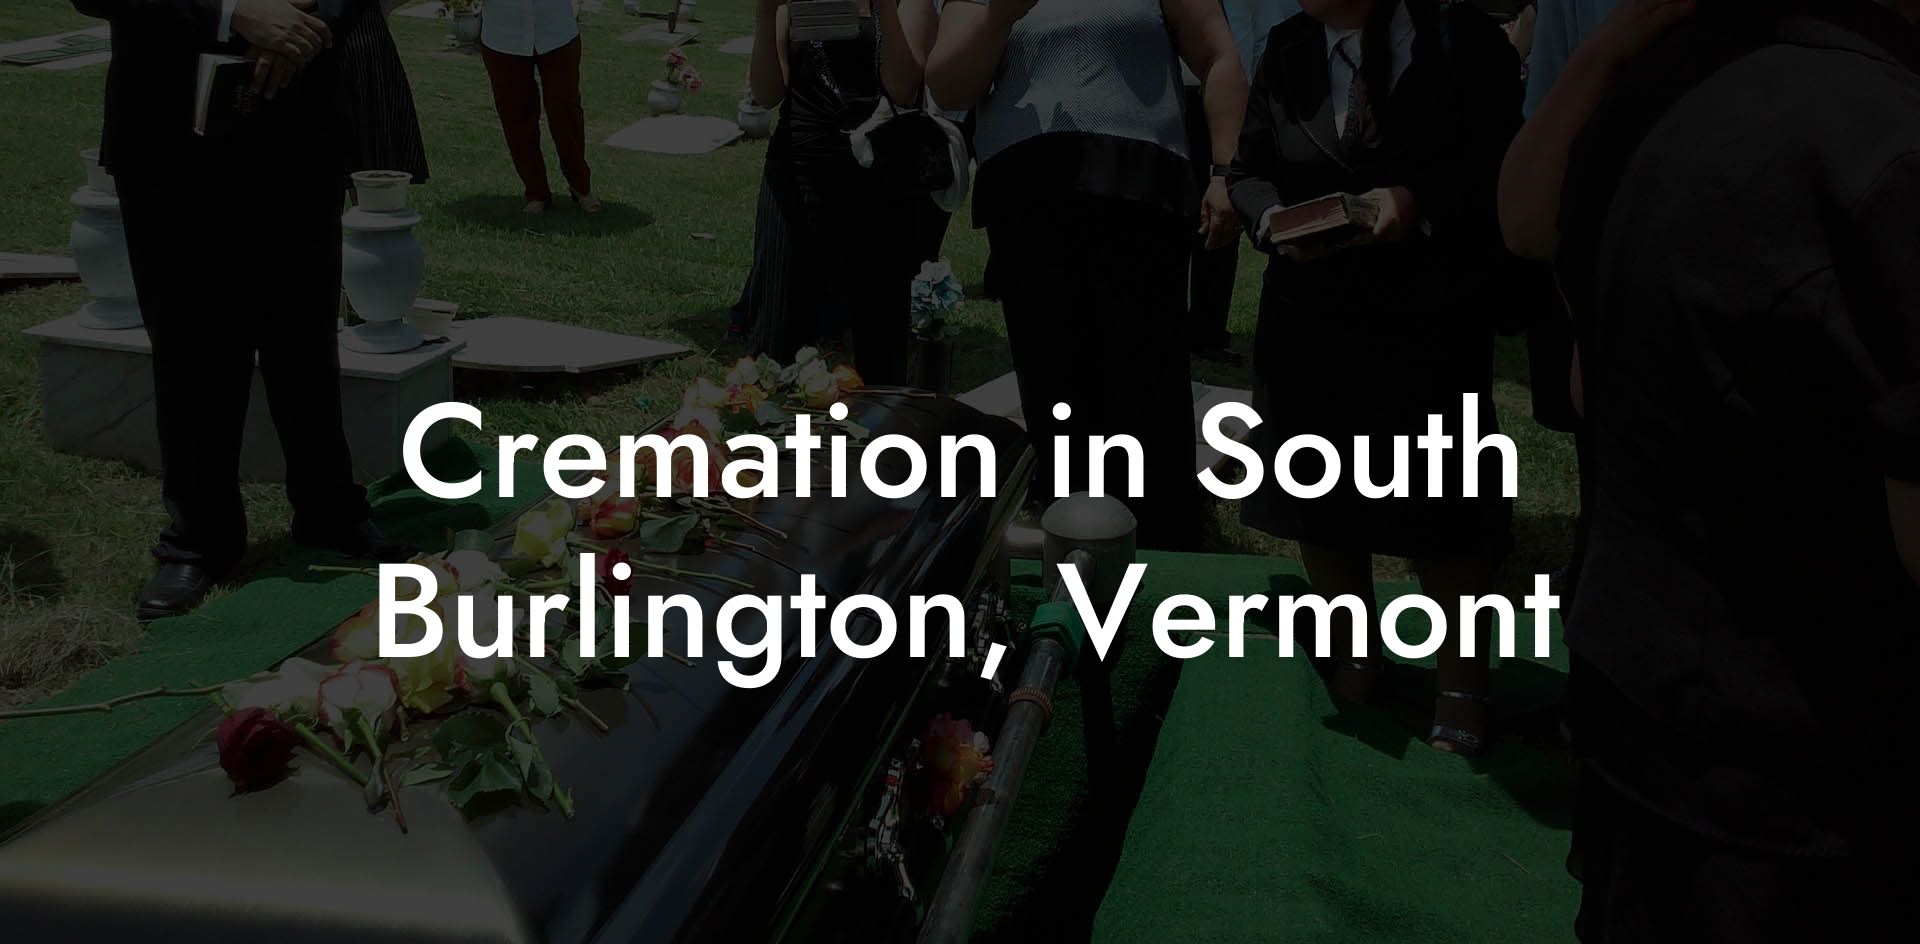 Cremation in South Burlington, Vermont